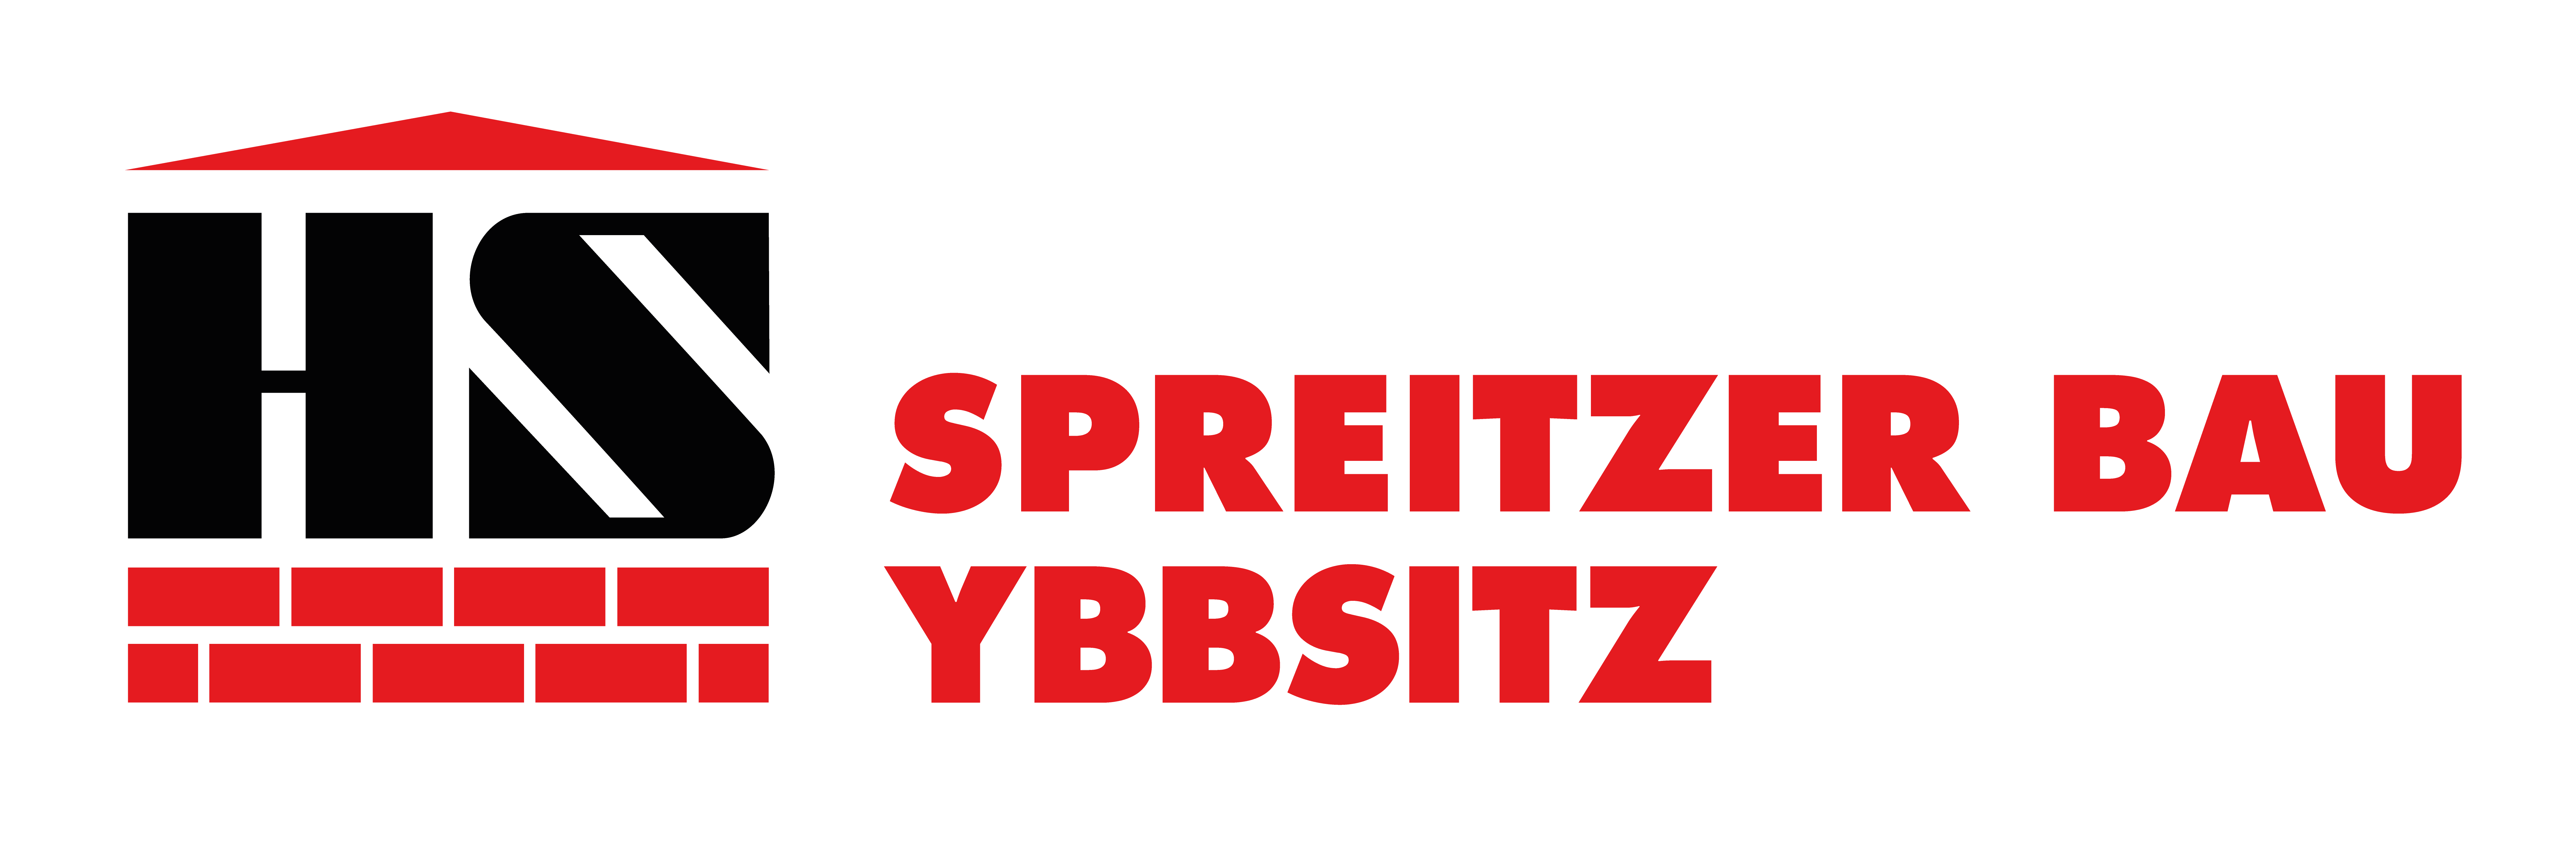 spreitzer-bau_logo